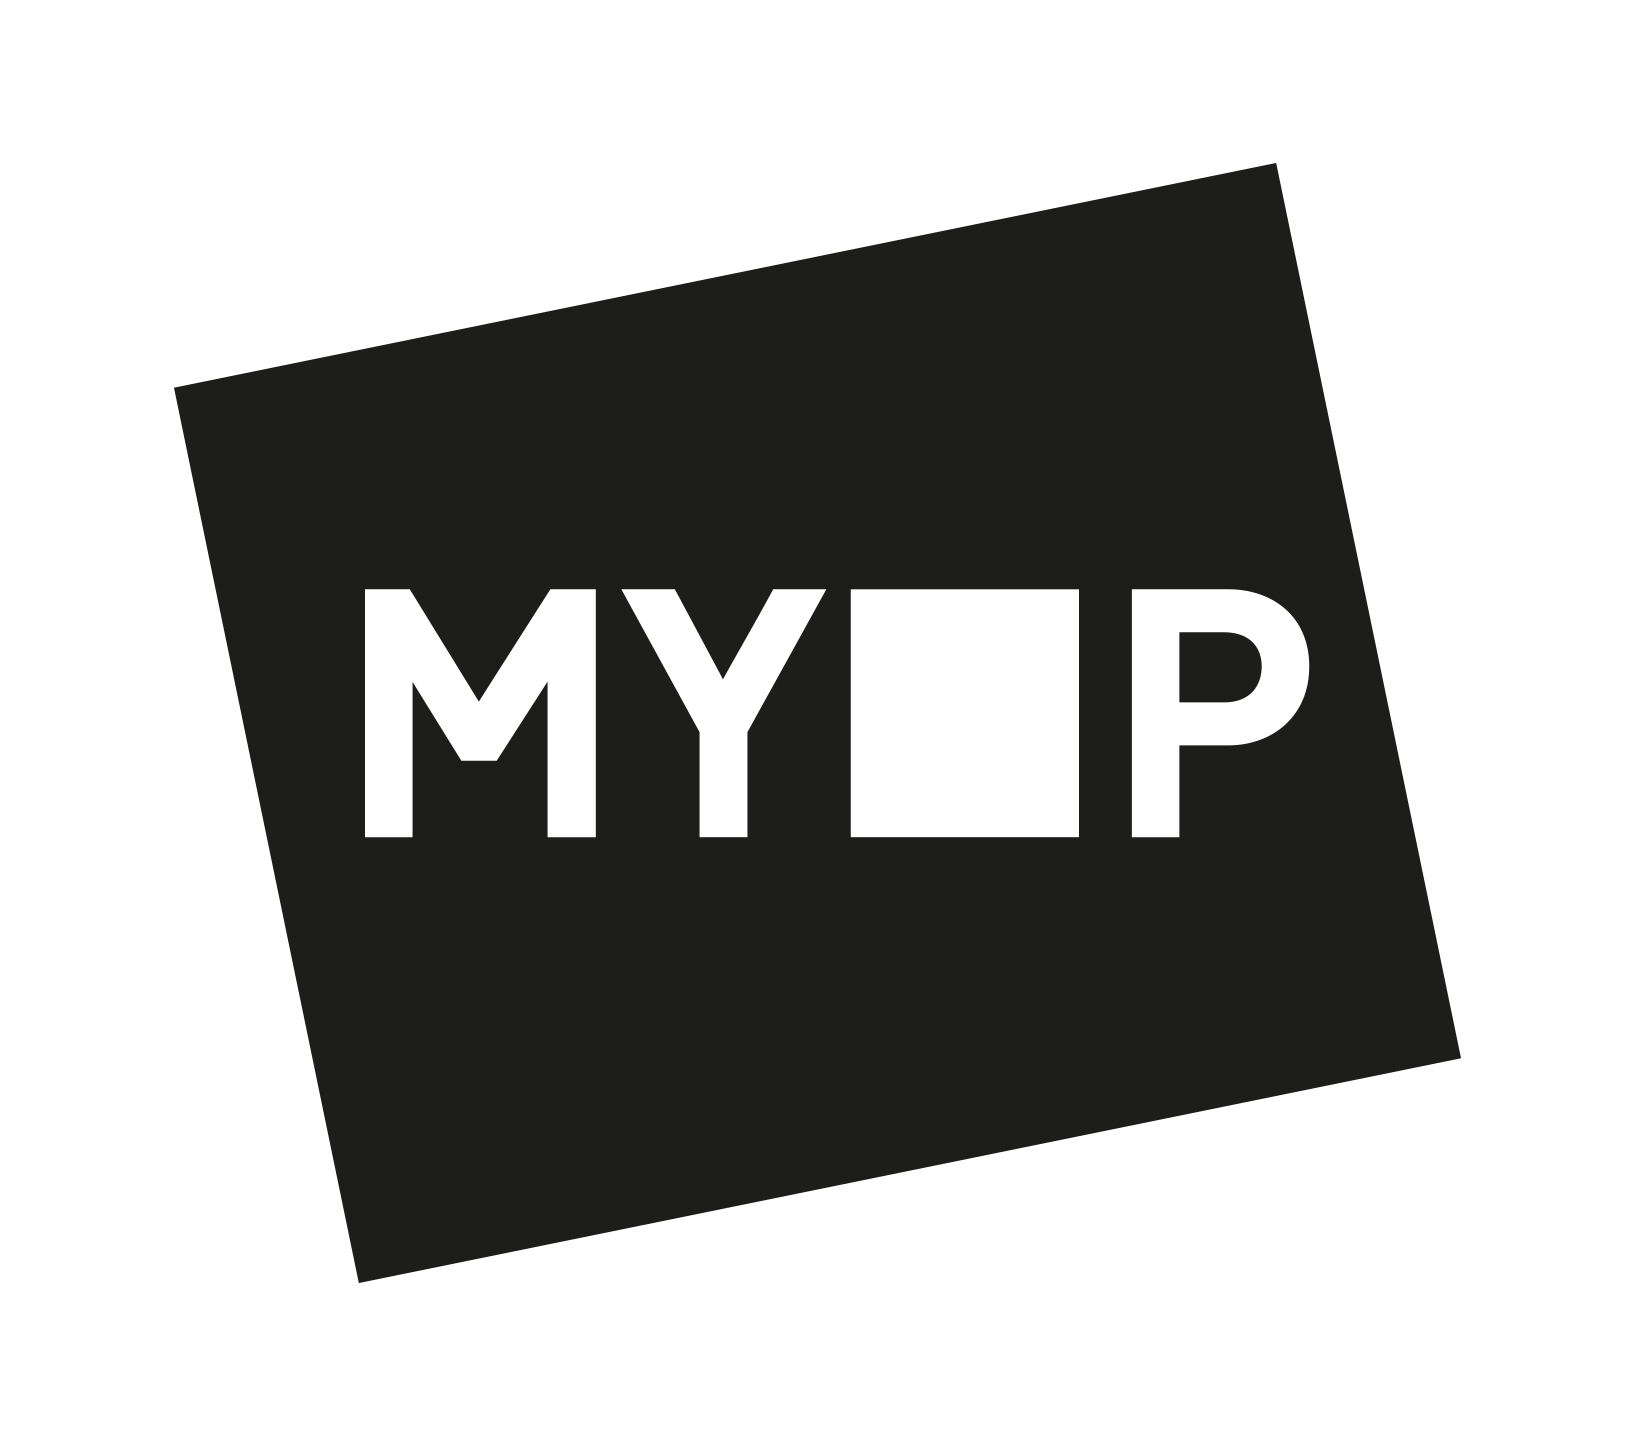 What’s up MYOP – Correspondance photographique